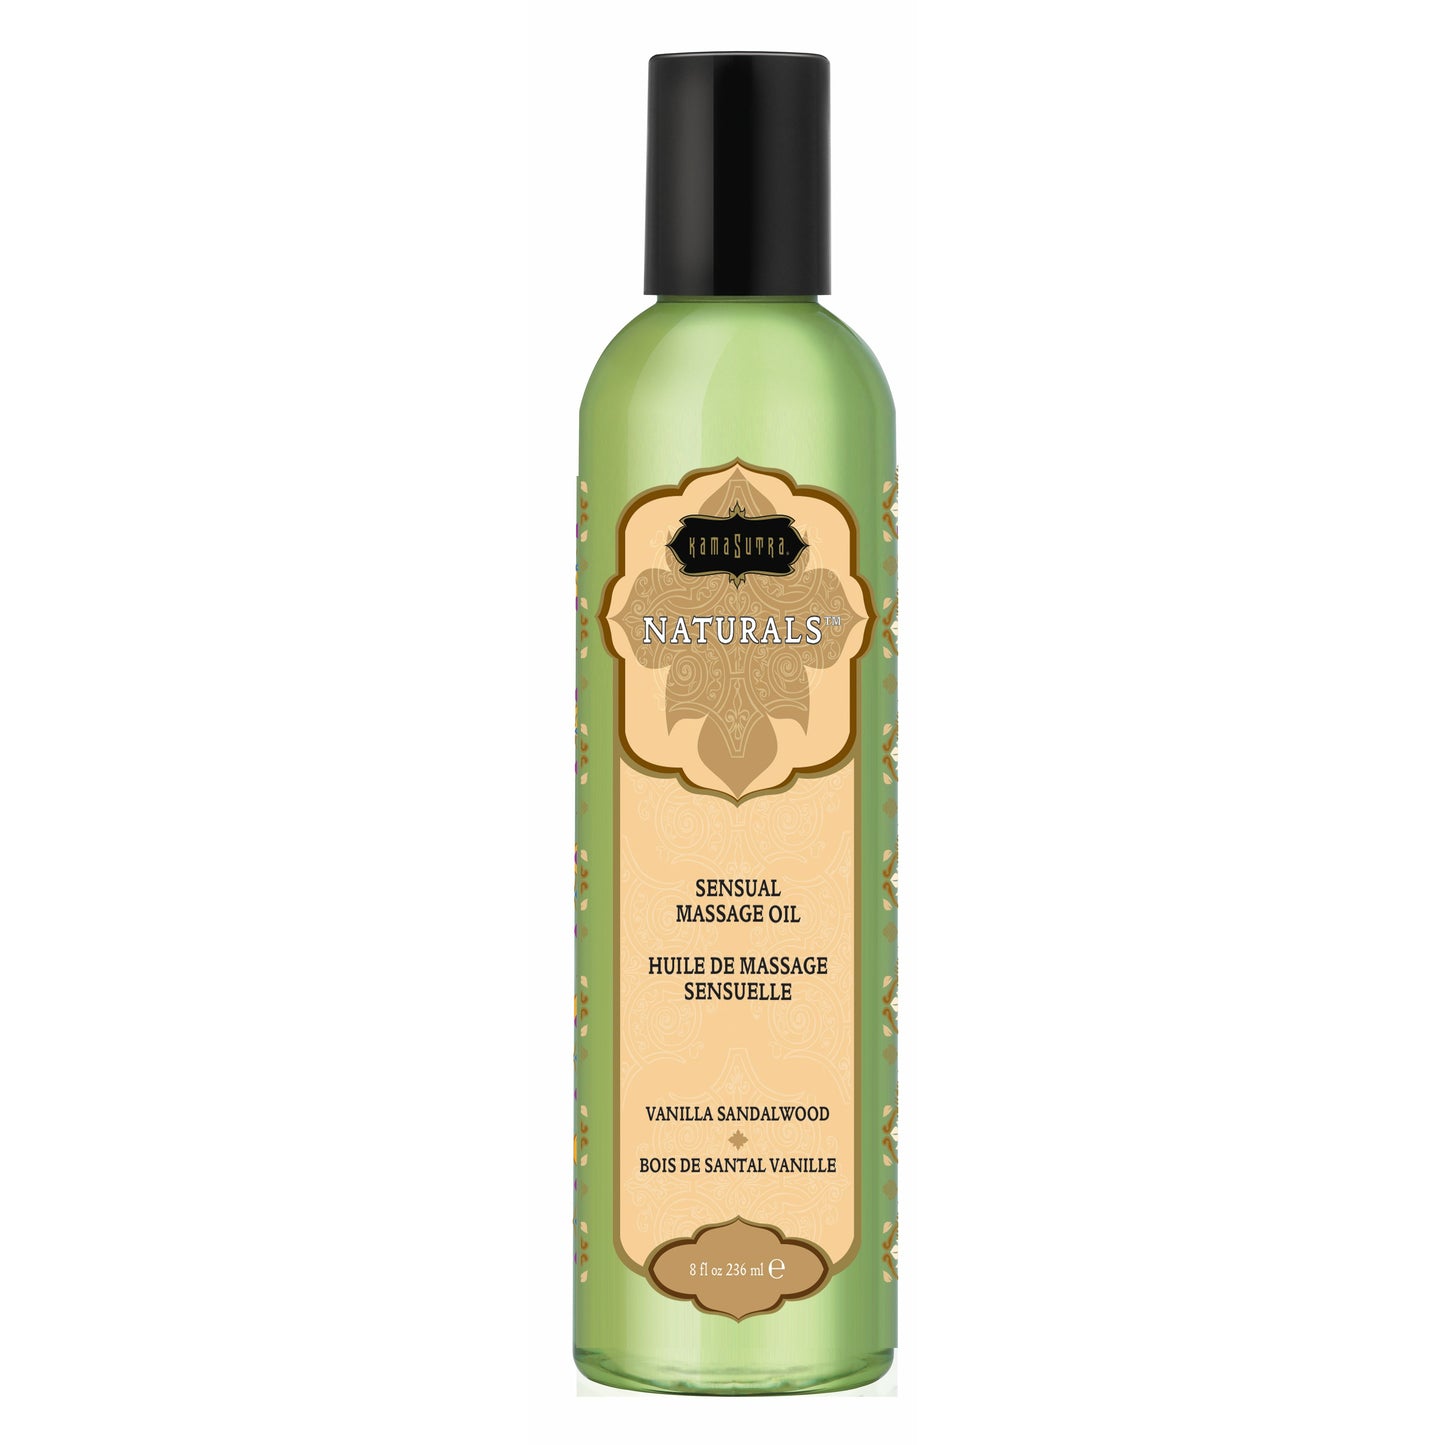 Naturals Massage Oil - Vanilla Sandalwood  8 Fl. Oz. KS10244